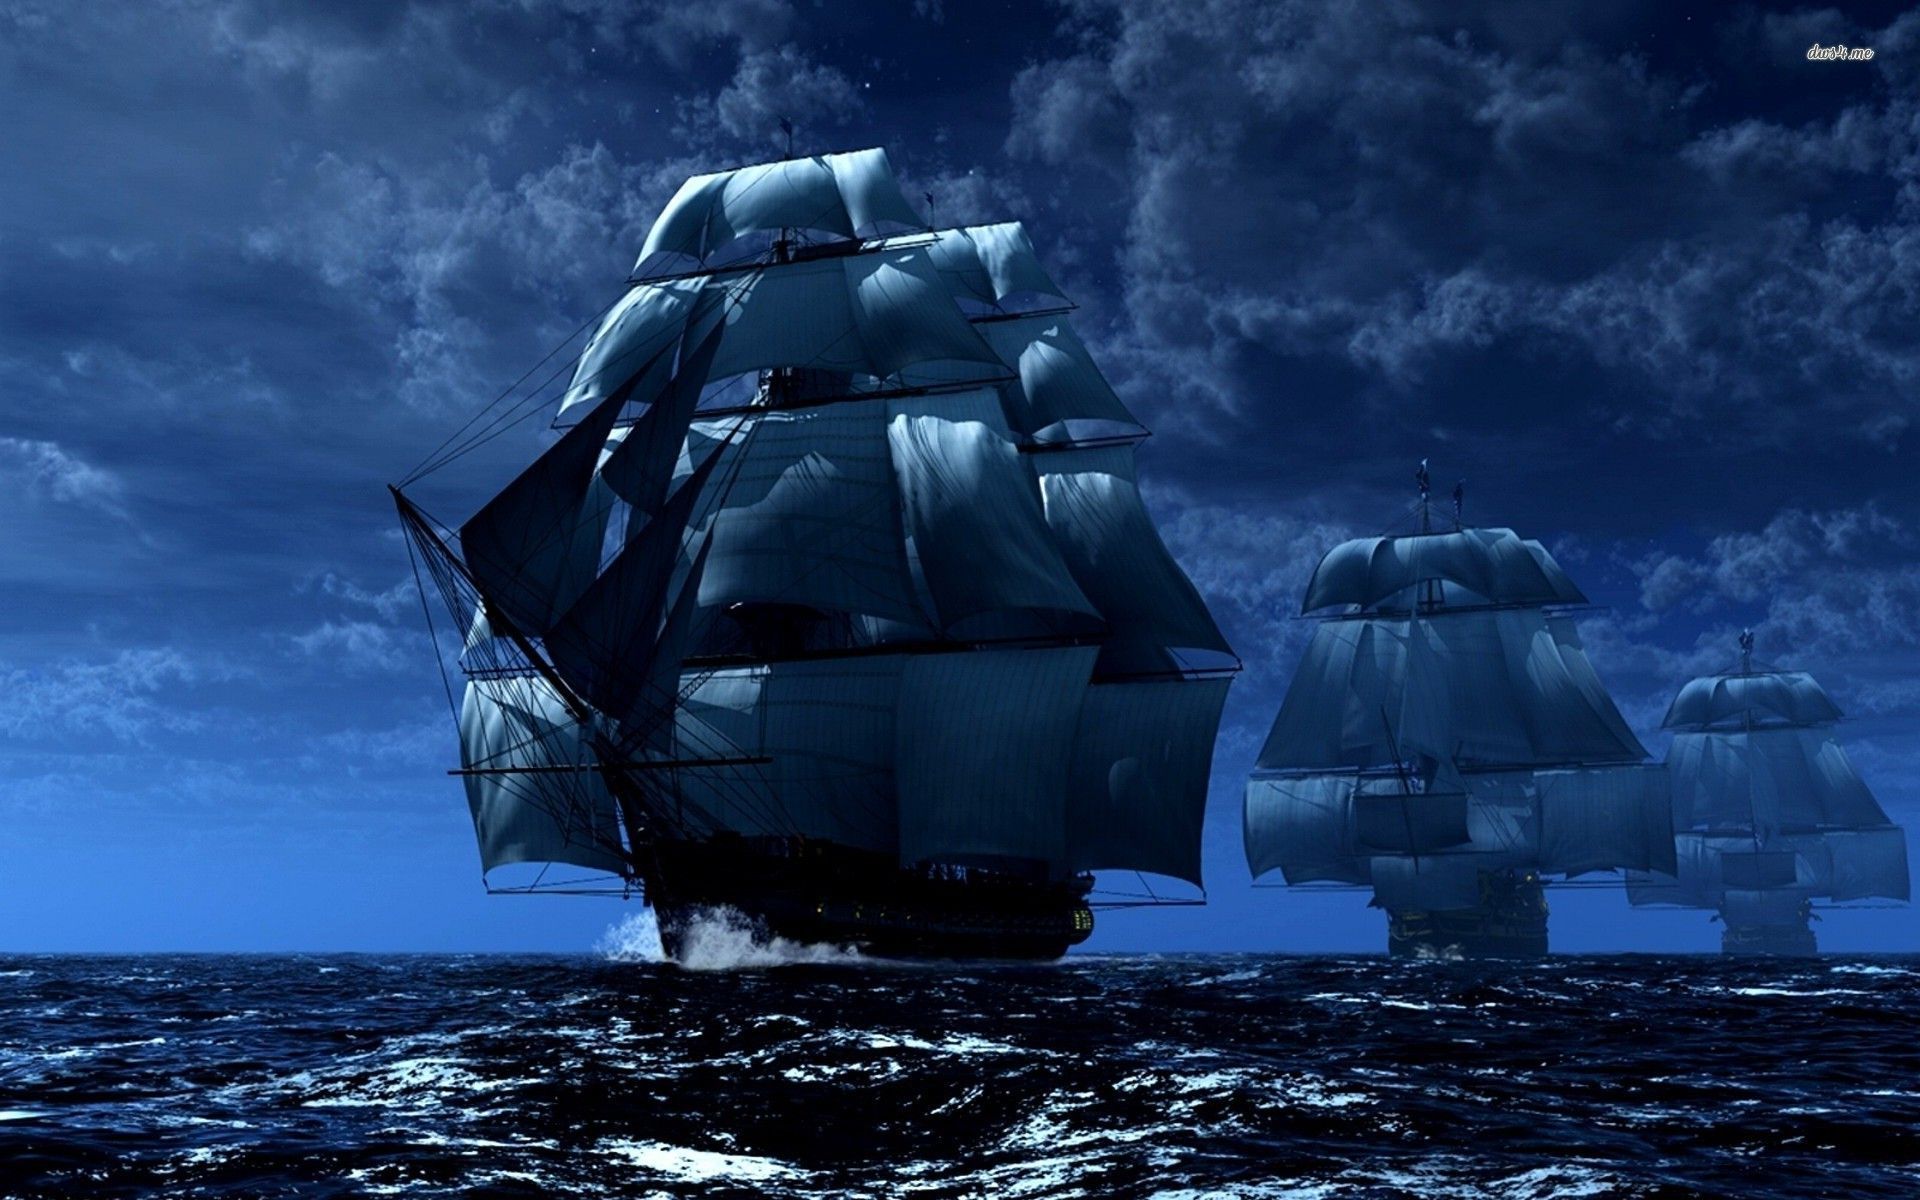 Pirate ships wallpaper - Fantasy wallpapers